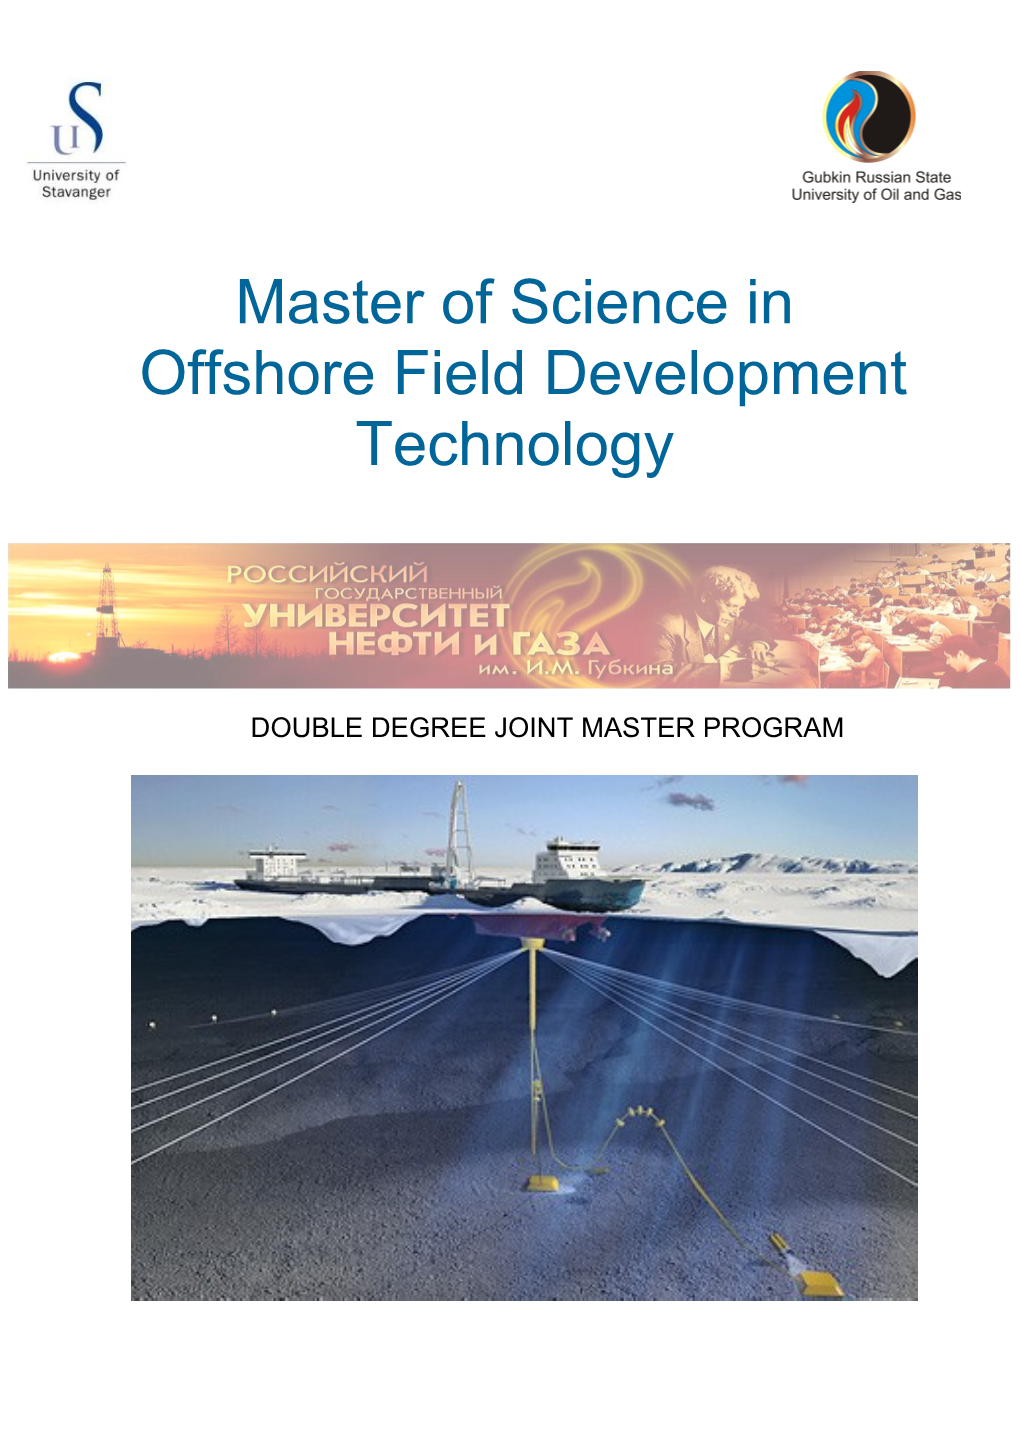 Offshore Field Development Technology